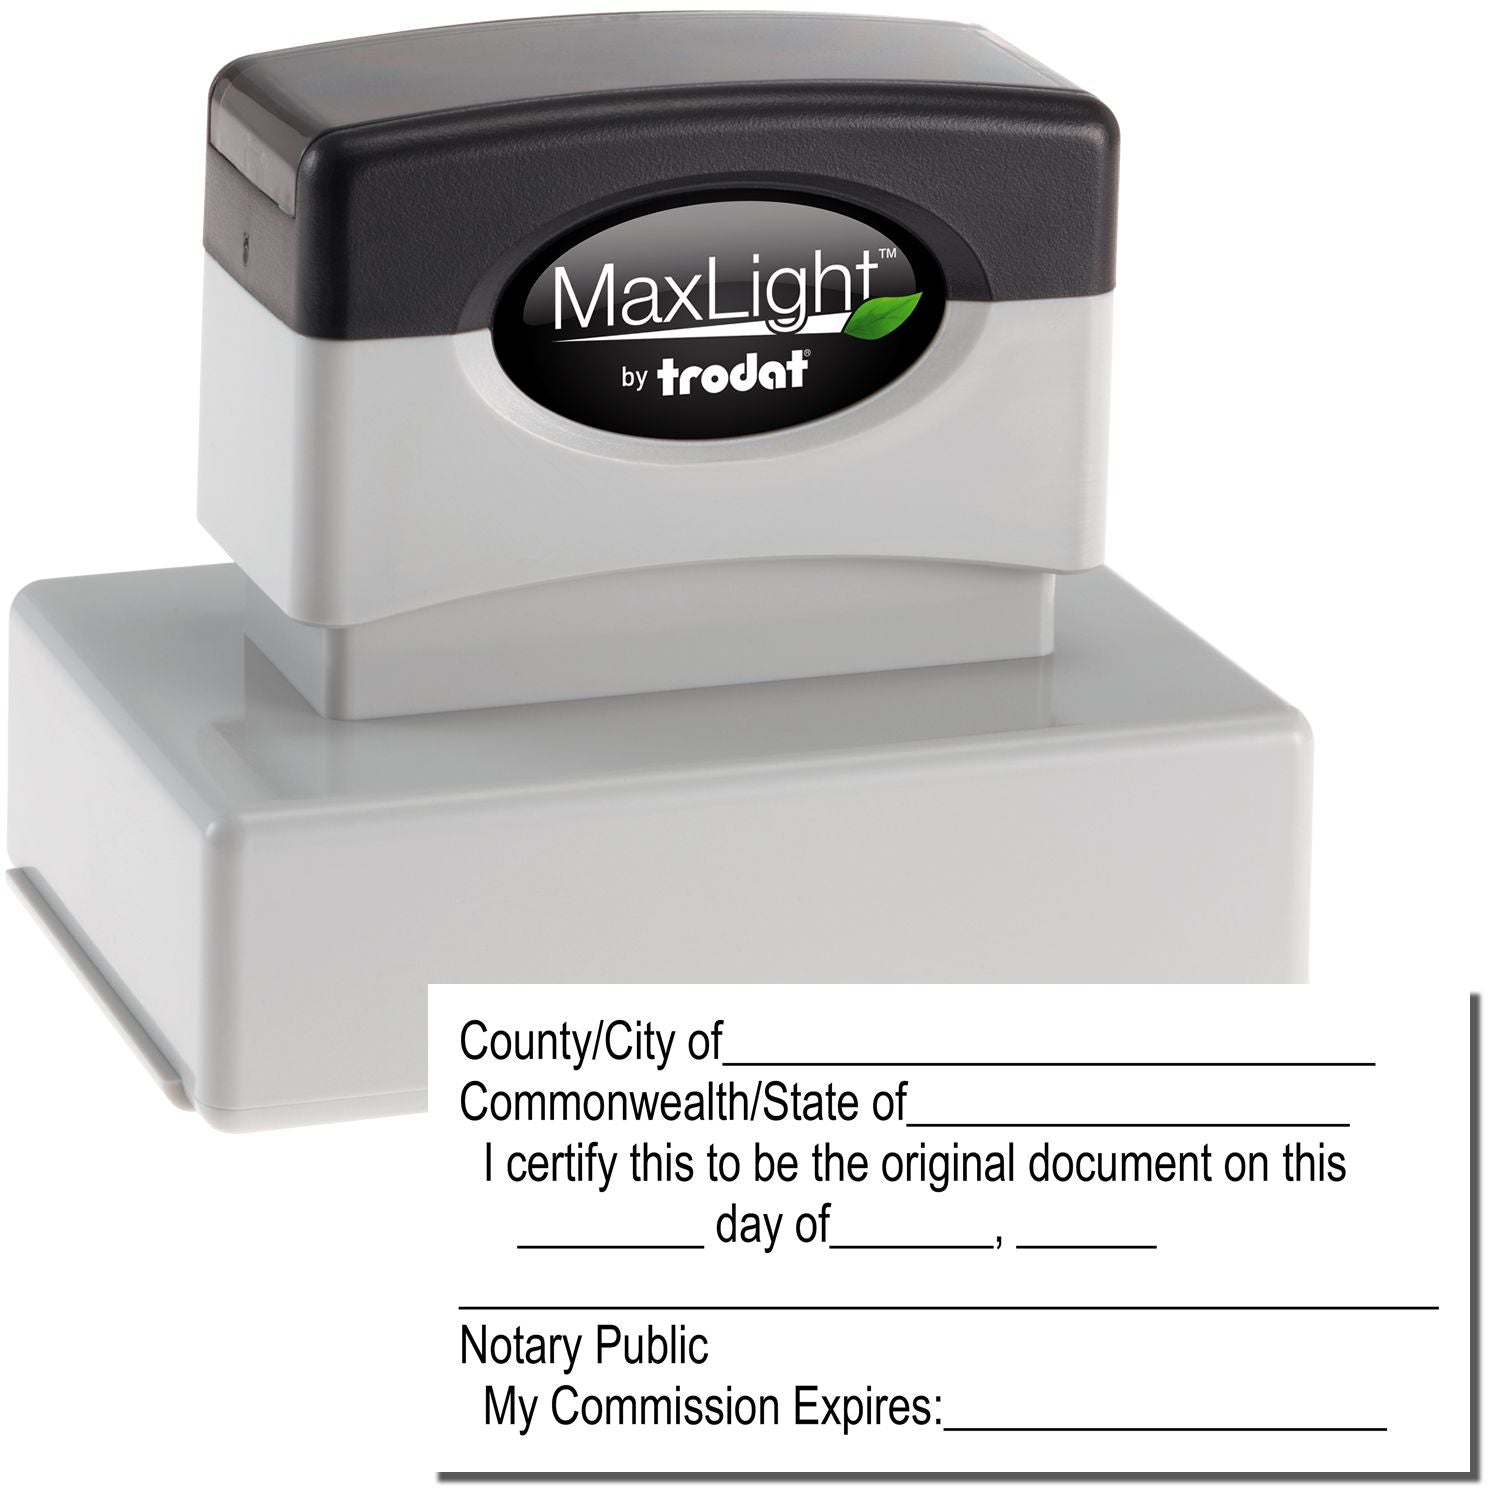 MaxLight Pre-Inked Original Document Stamp Main Image